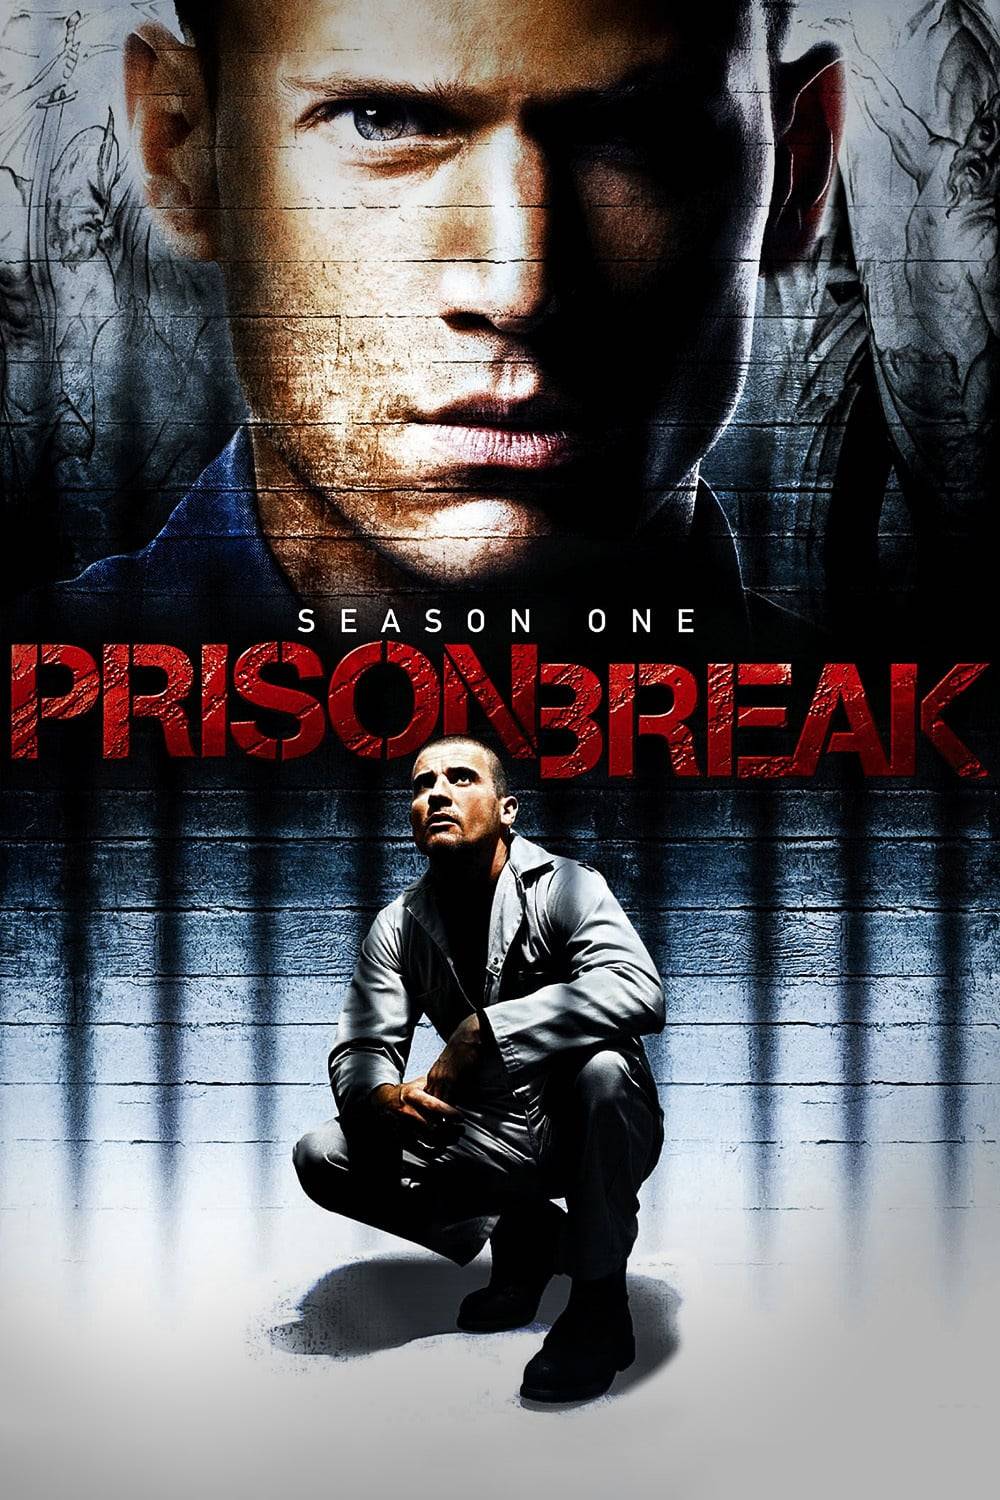 Prison break